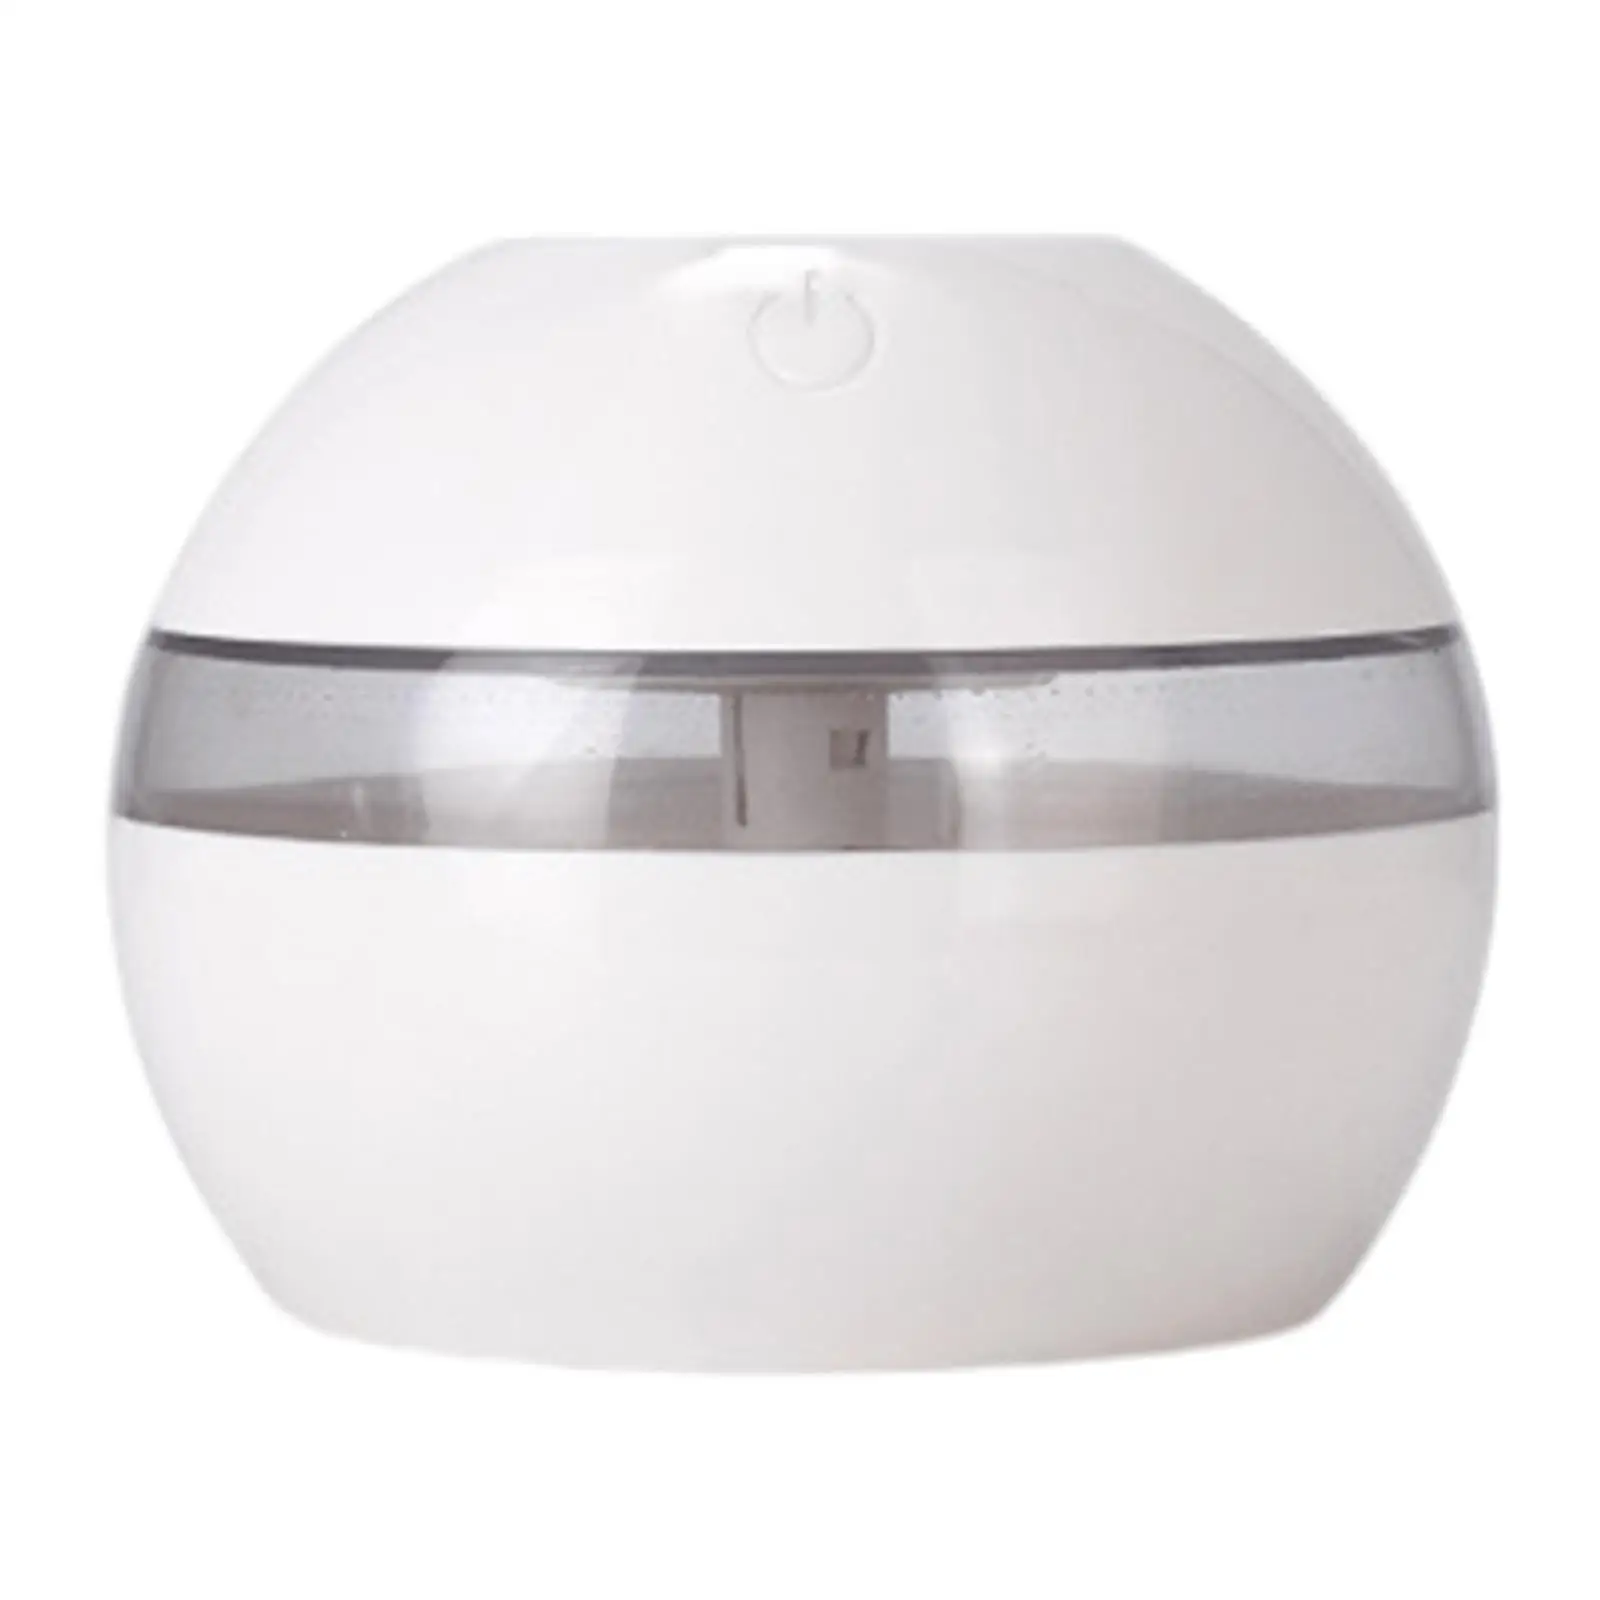 Humidifier W USB Fan Spheric W Night Light Device Desktop Multifunctional Three-In-One USB Power for Car Office Home Travel